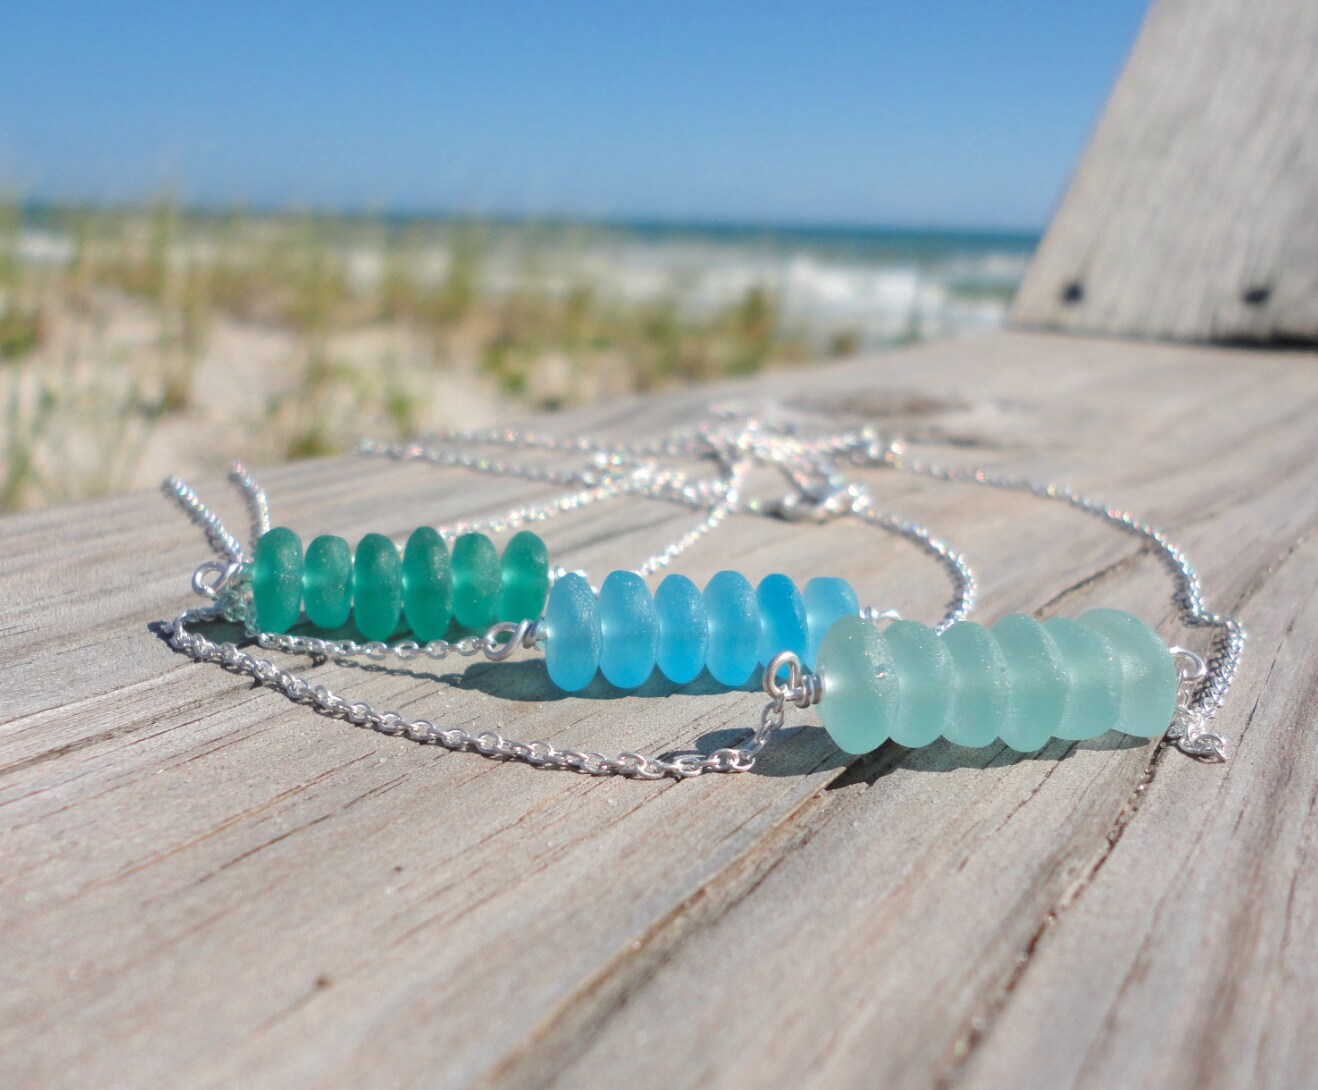 Make waves' blue beach glass necklace - My Captured Journey